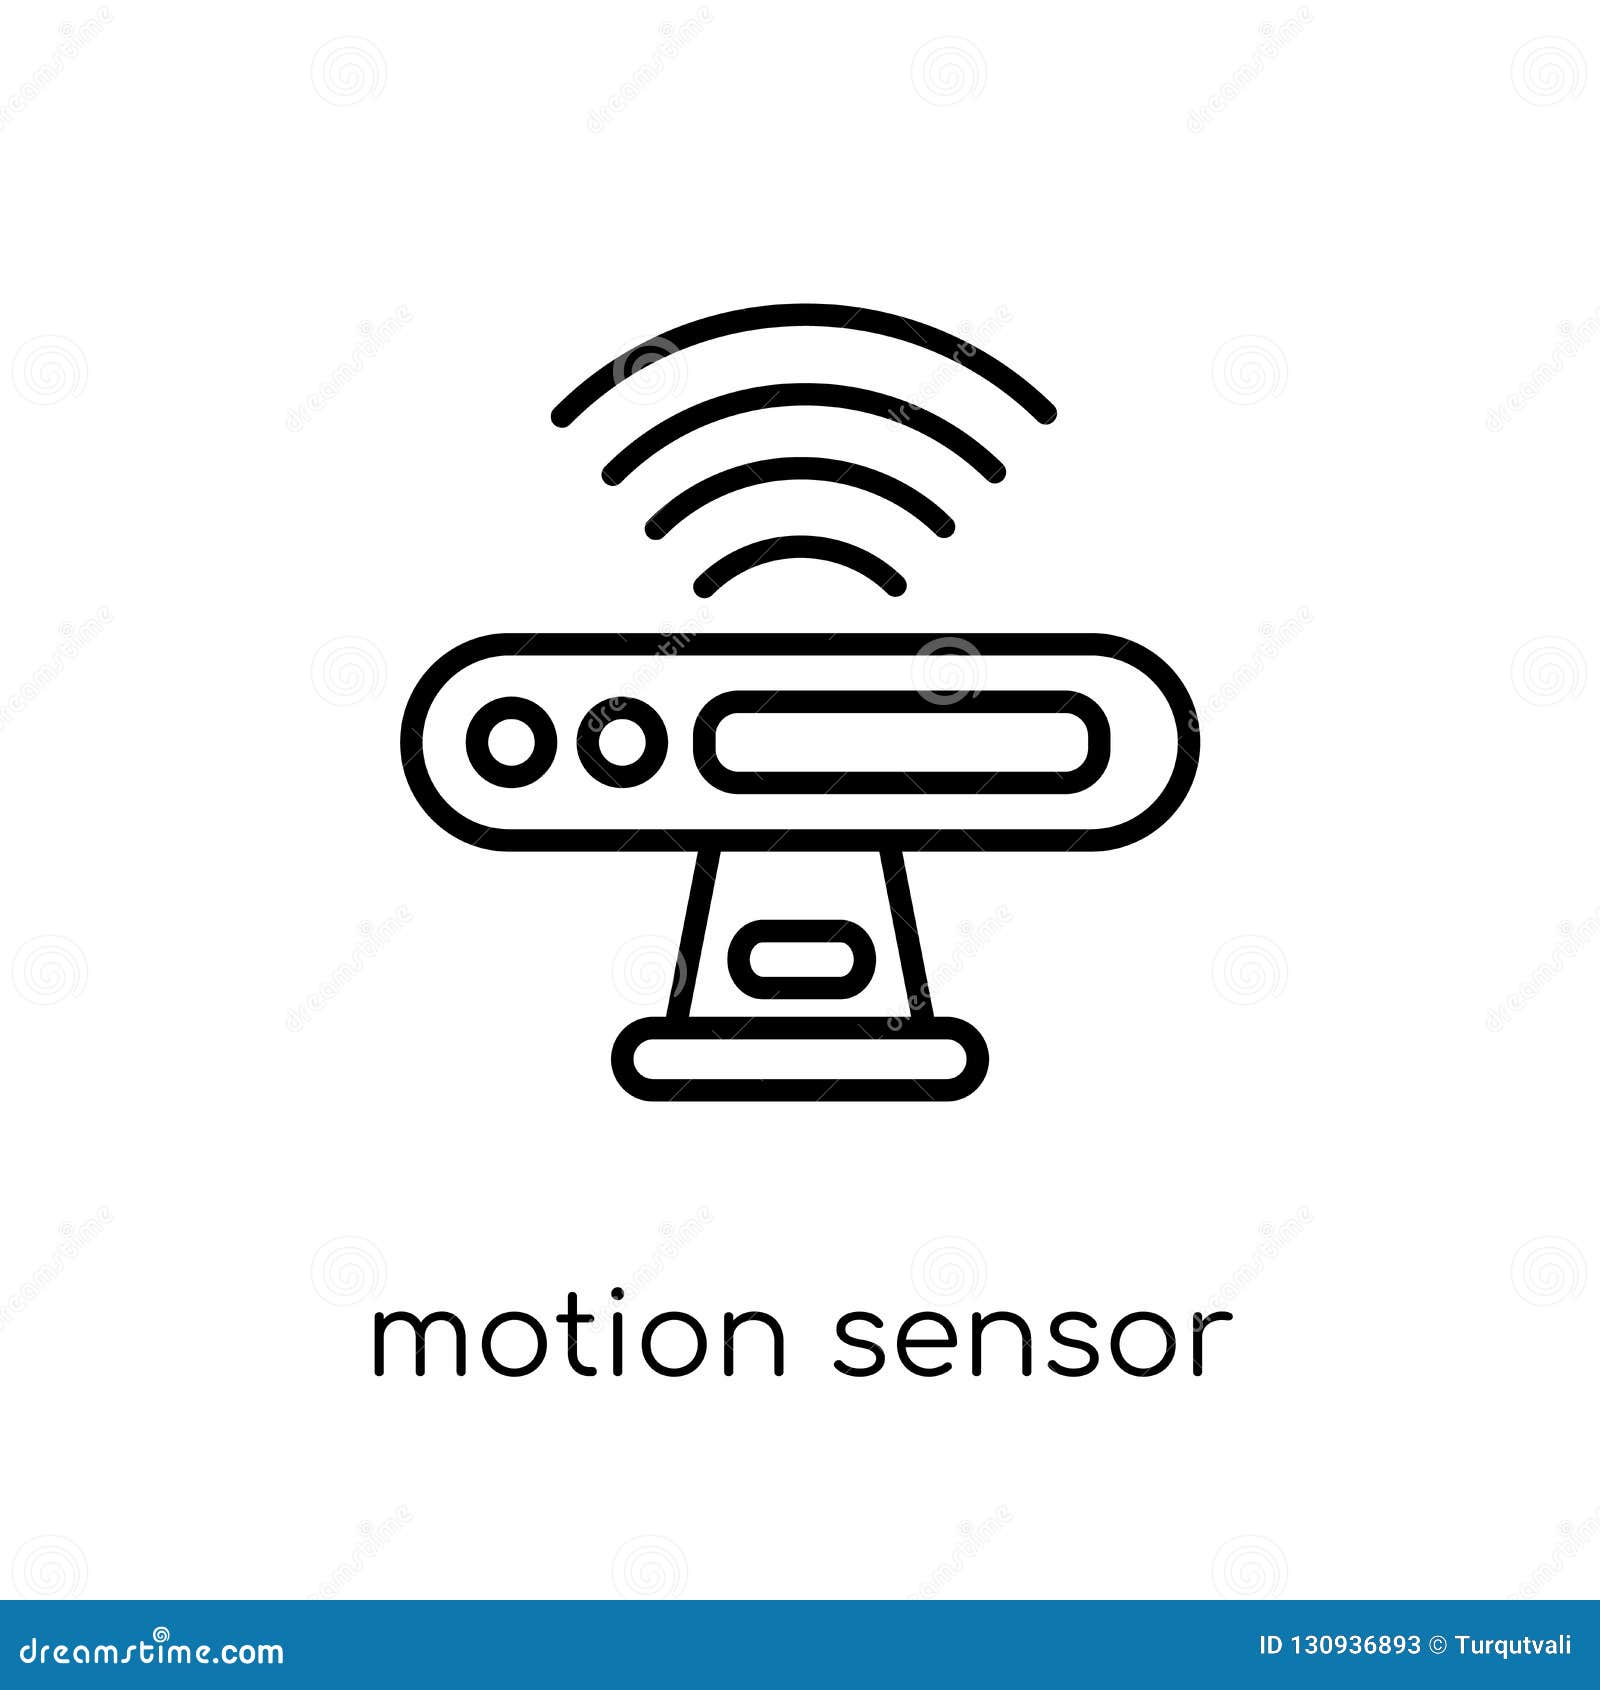 Покажи датчики на картинке. Датчик движения значок. Датчики сенсоры иконка. Проводные сенсоры иконка. Автоматические датчики значок.